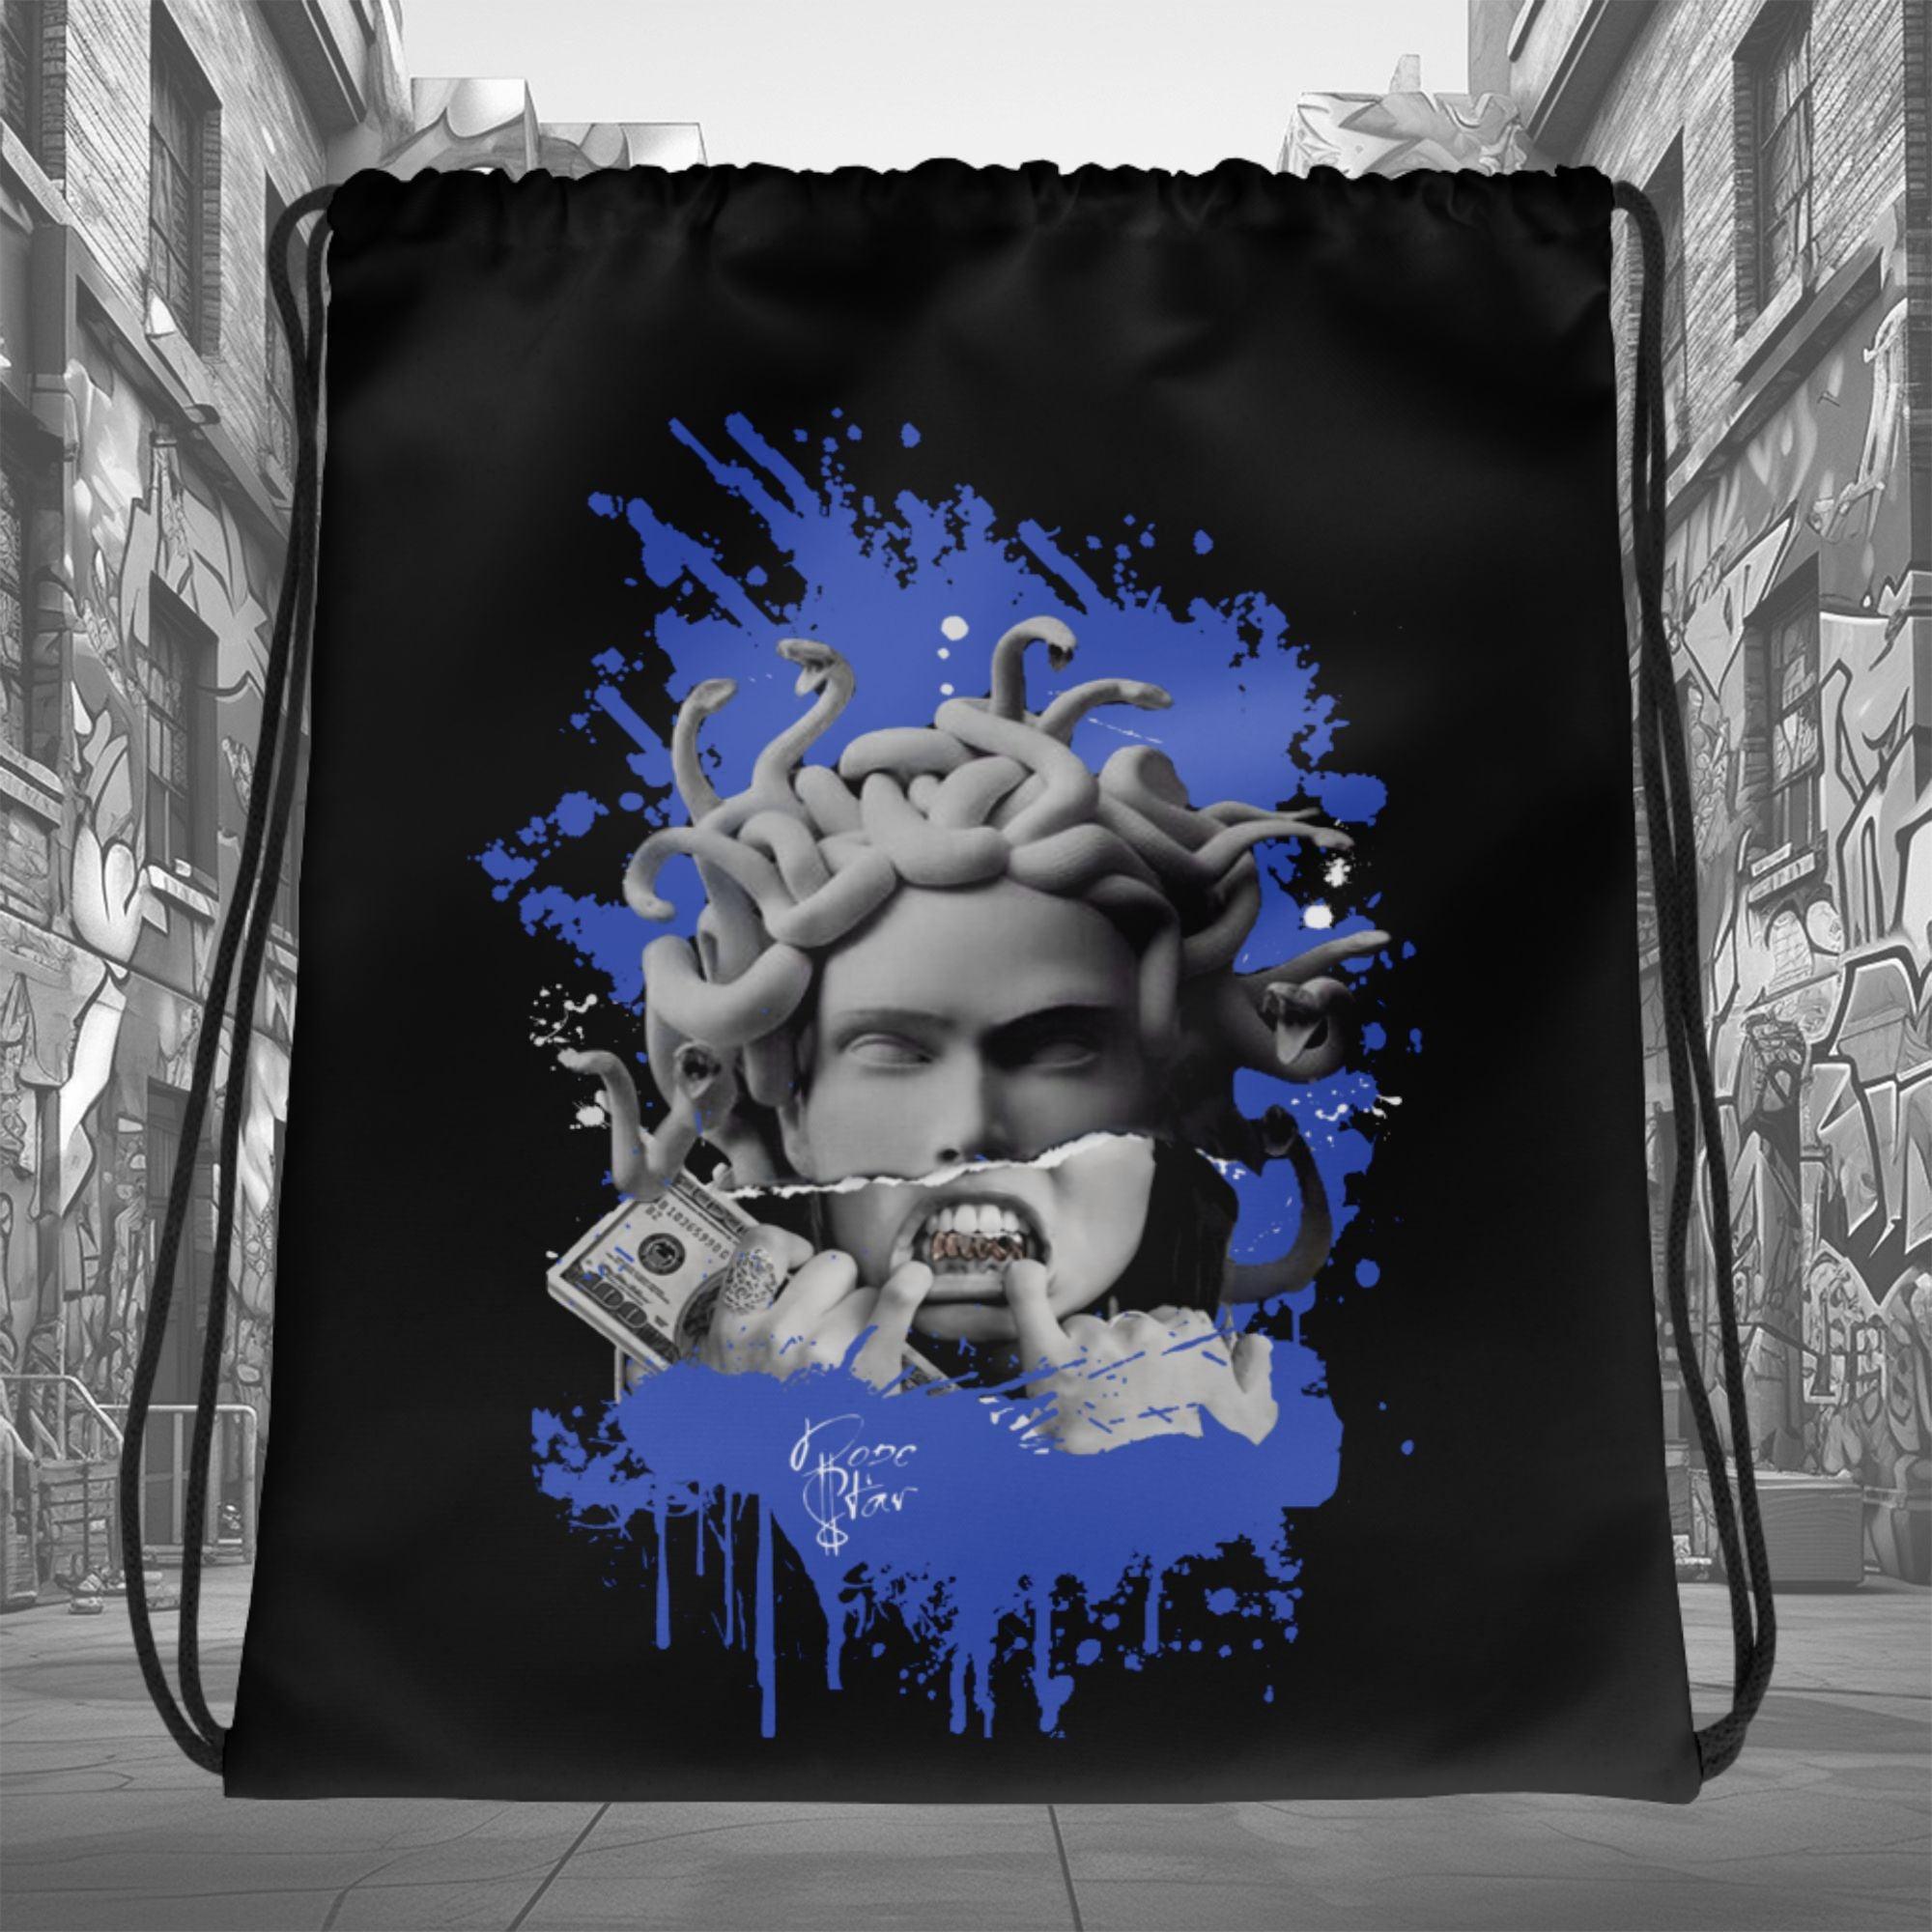 Amazing Black MEDUSA Drawstring Bag Nike Dunk Disrupt 2 Hyper Royal photo